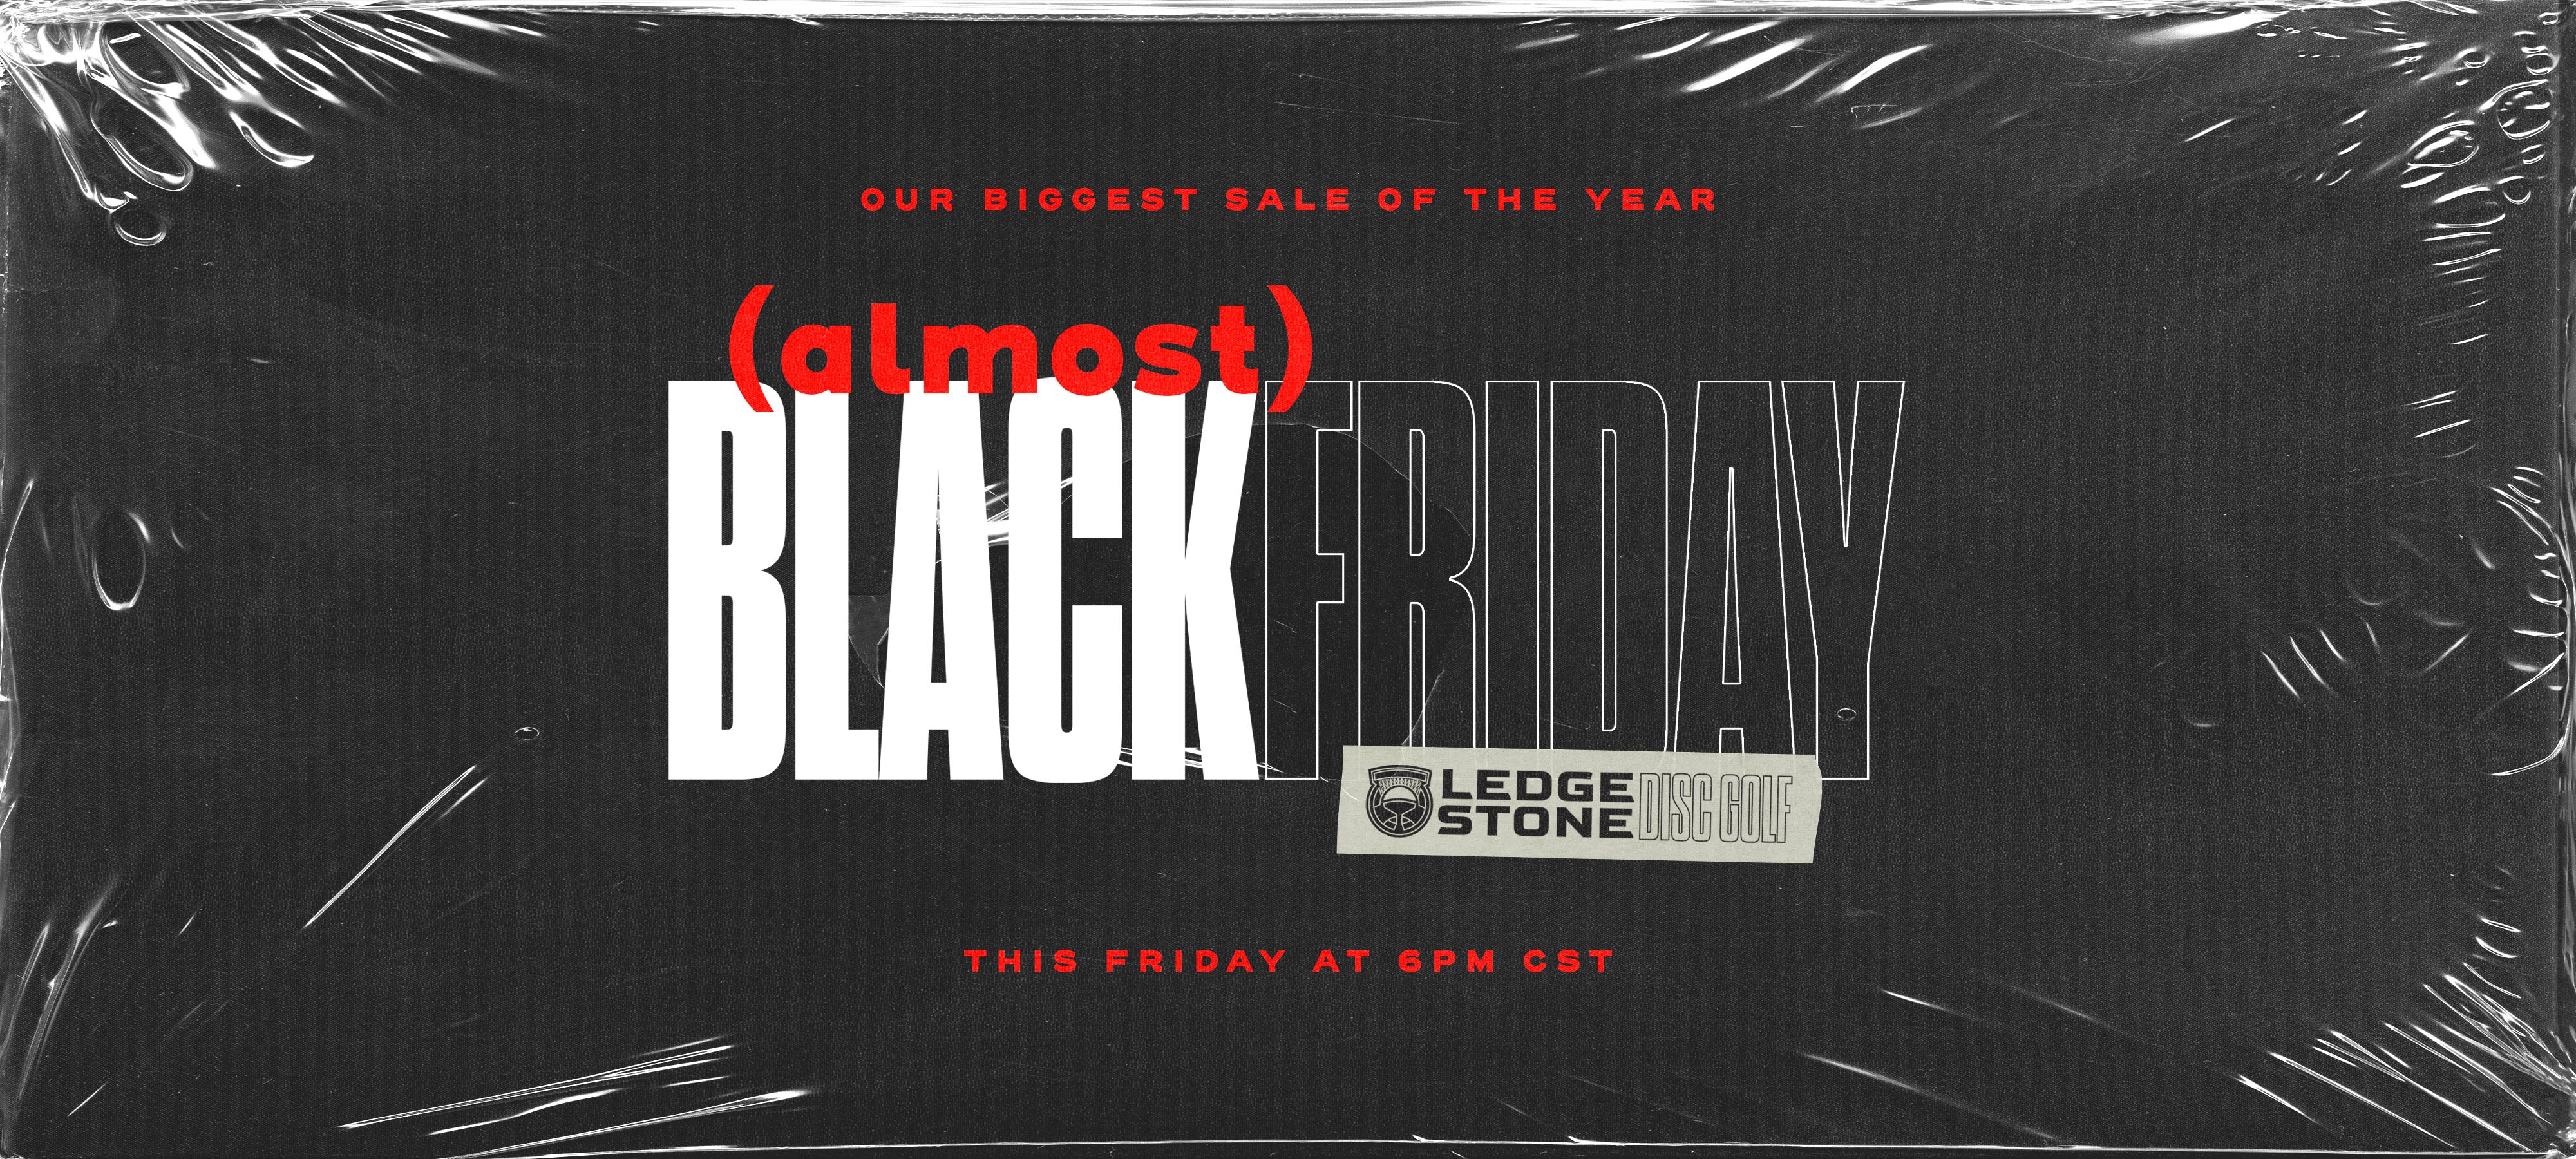 (almost) Black Friday Deals